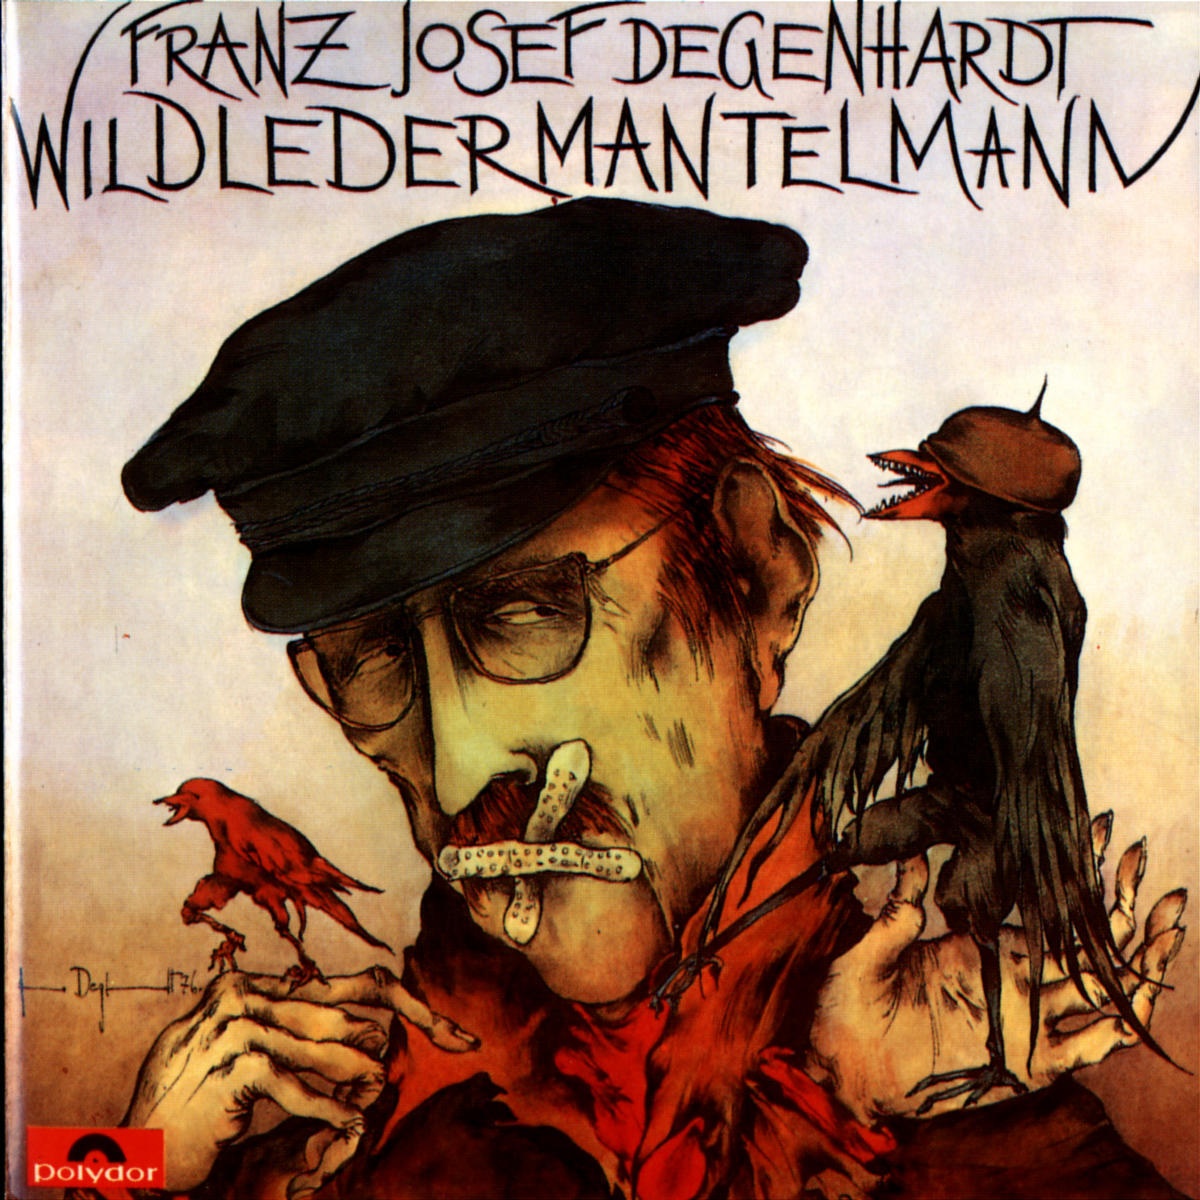 Wildledermantelmann - Franz Josef Degenhardt. (CD)